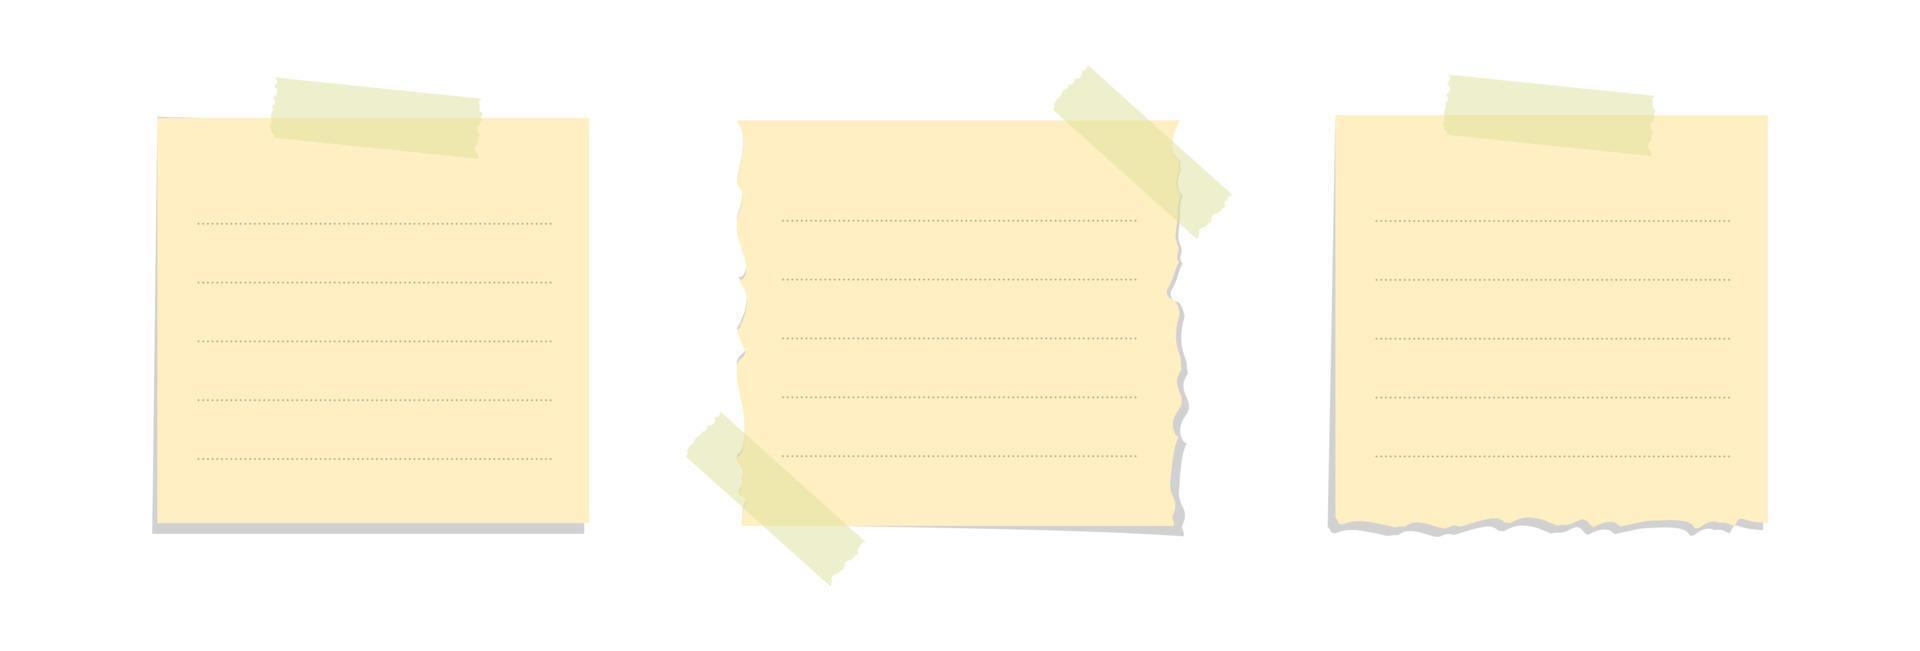 Rasgado amarillo pegajoso Nota vector ilustración. grabado cuadrado oficina memorándum papel modelo.